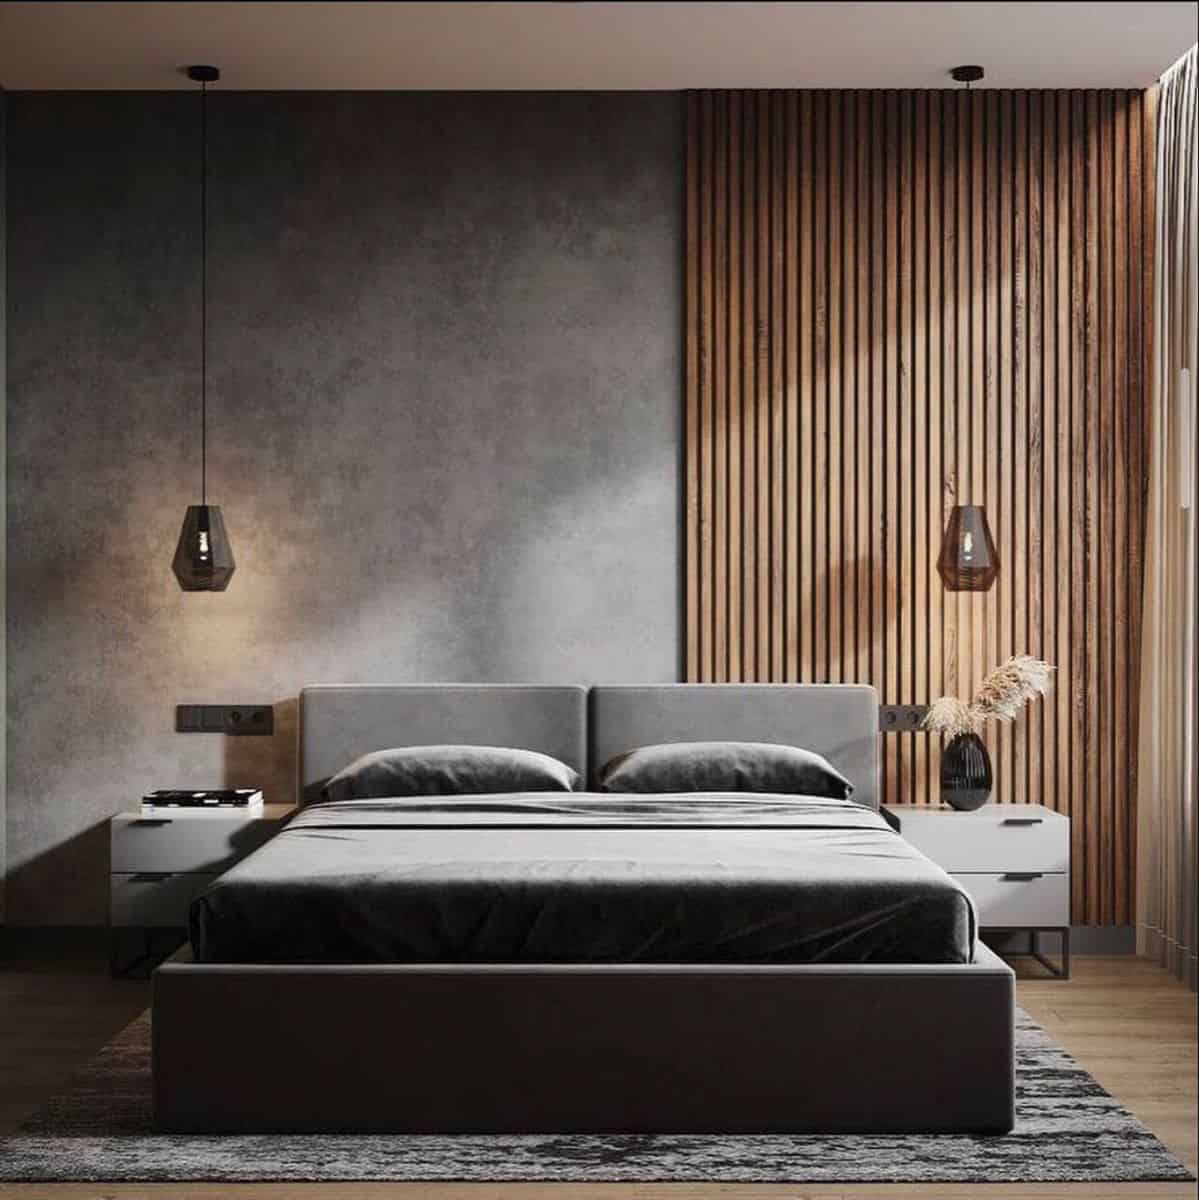 Masculine design well suited for men interior bedroom colour